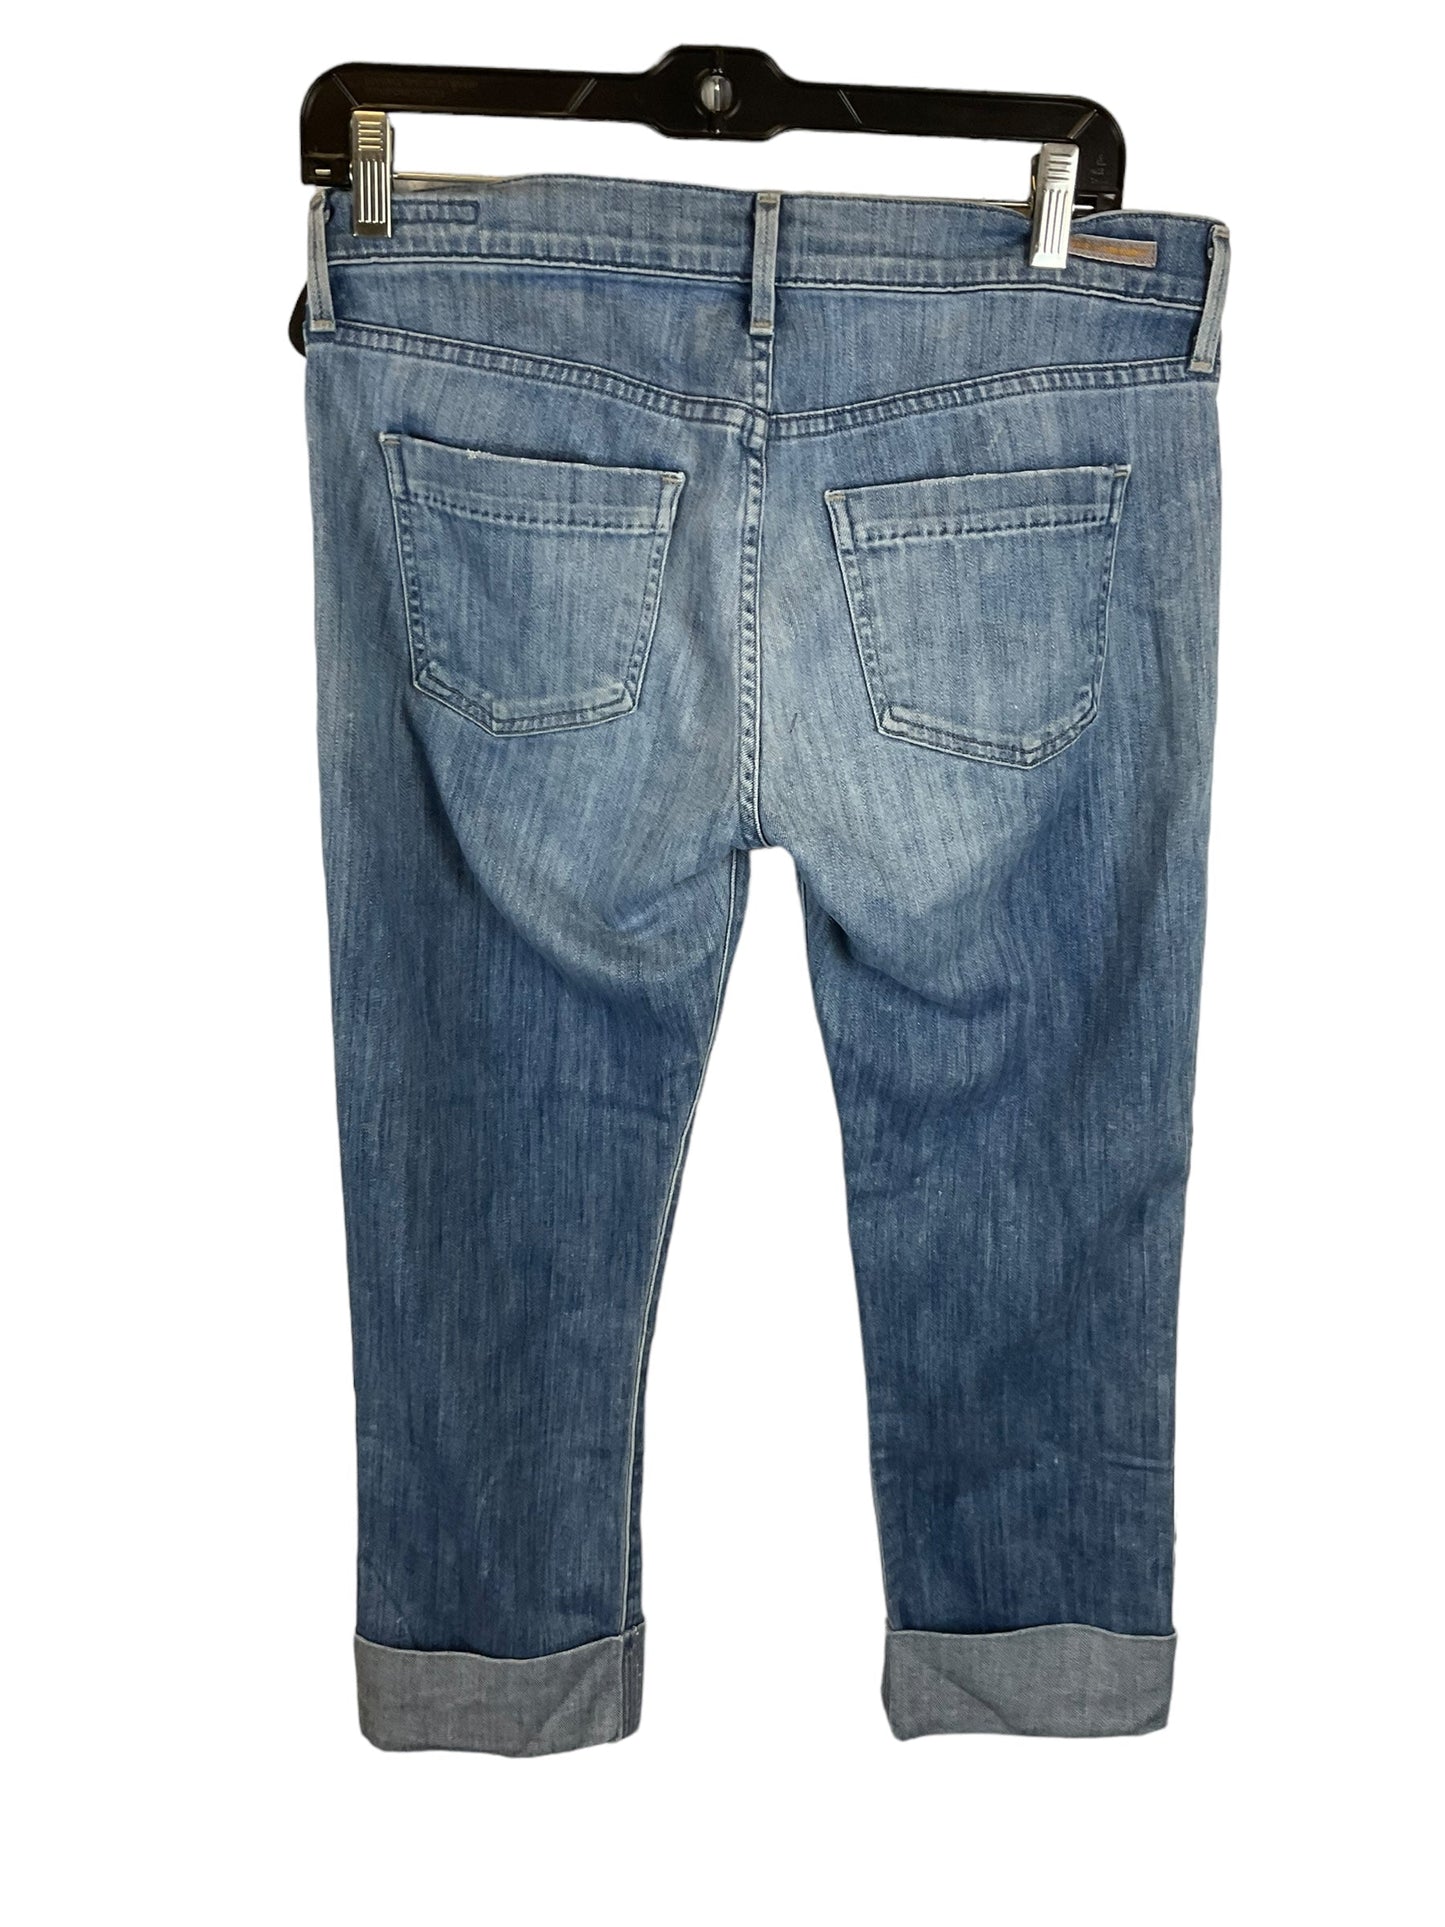 Blue Denim Jeans Designer Citizens Of Humanity, Size 6